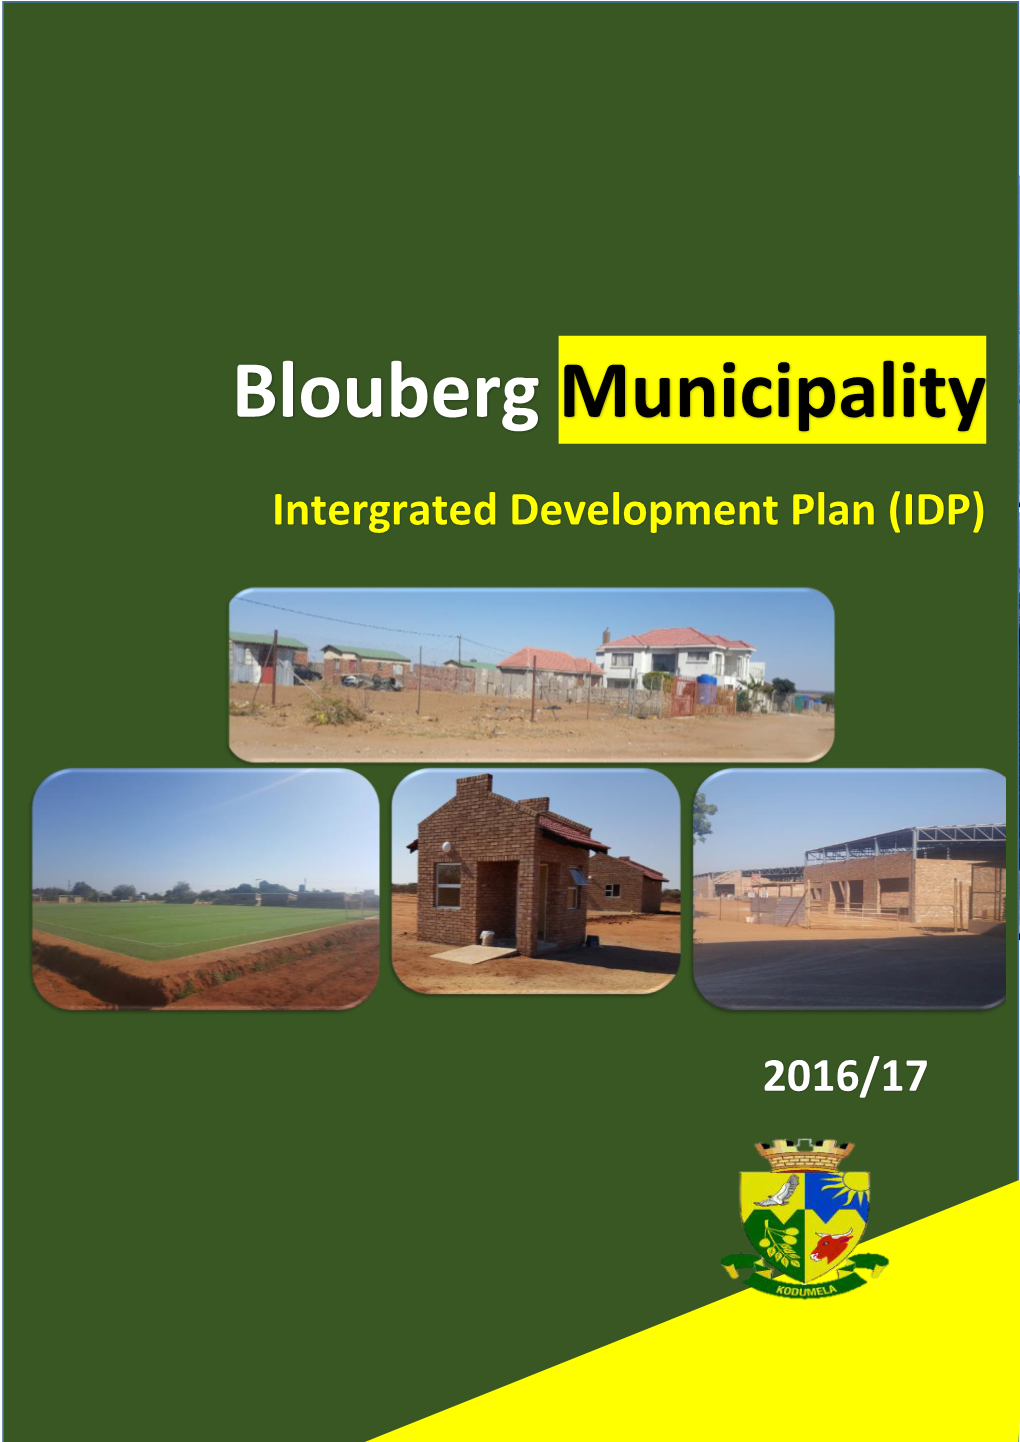 Intergrated Development Plan (IDP)